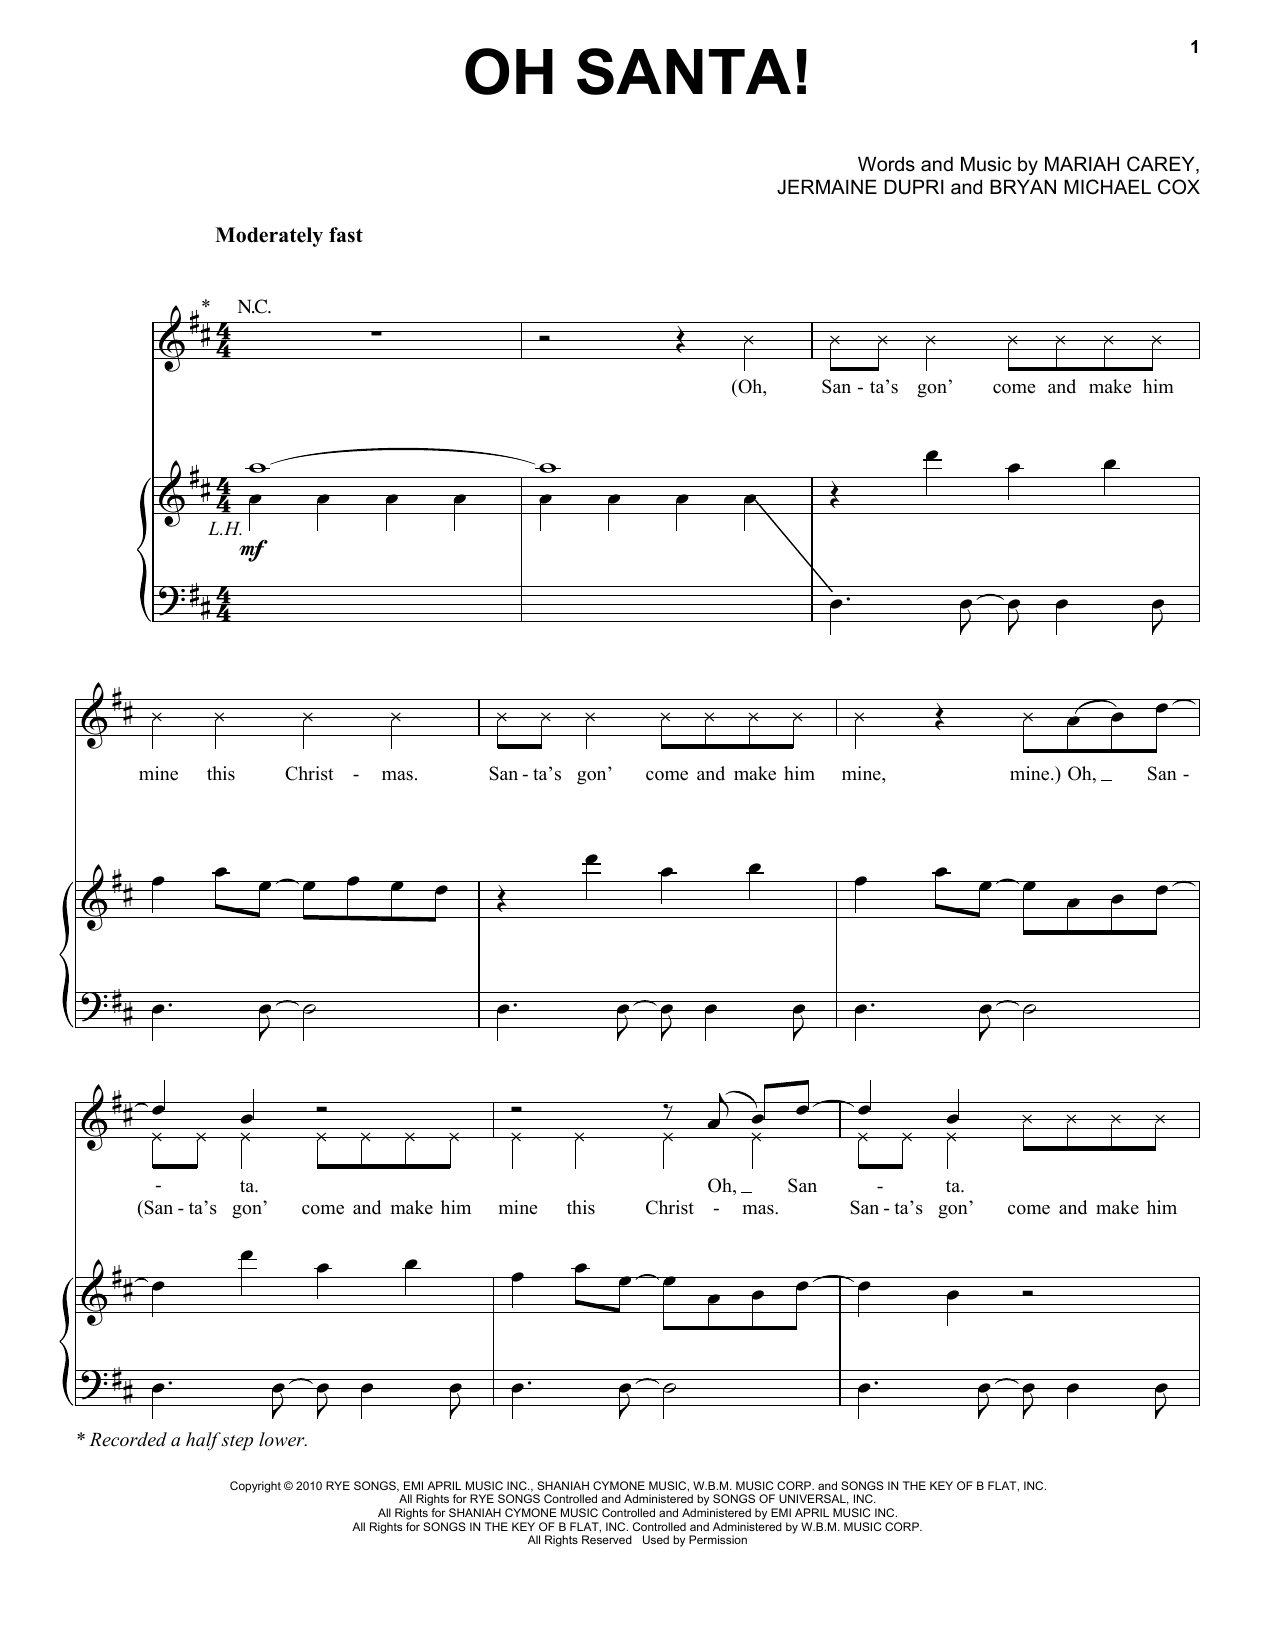 Mariah Carey Oh Santa! Sheet Music Notes & Chords for Piano, Vocal & Guitar (Right-Hand Melody) - Download or Print PDF